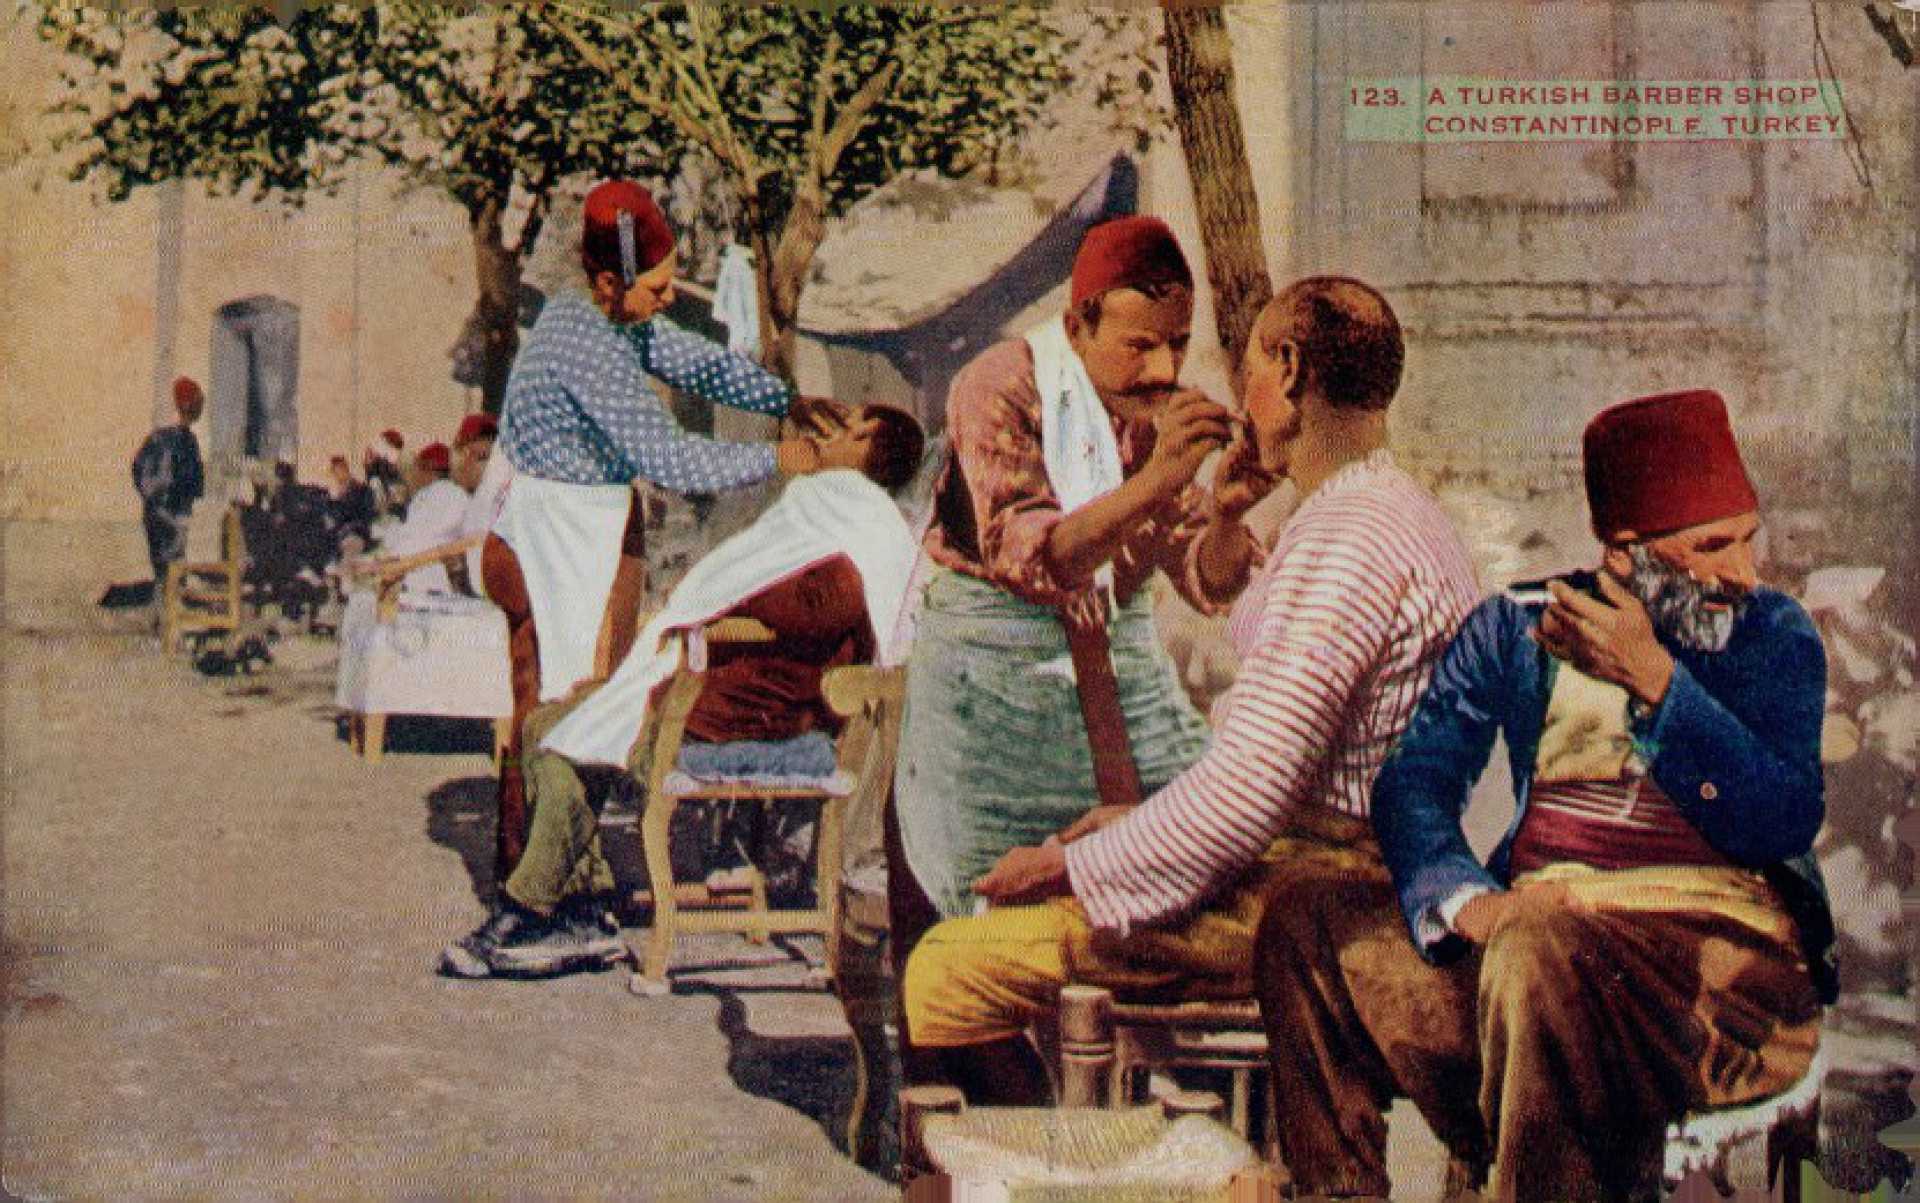 A turkish barber shop